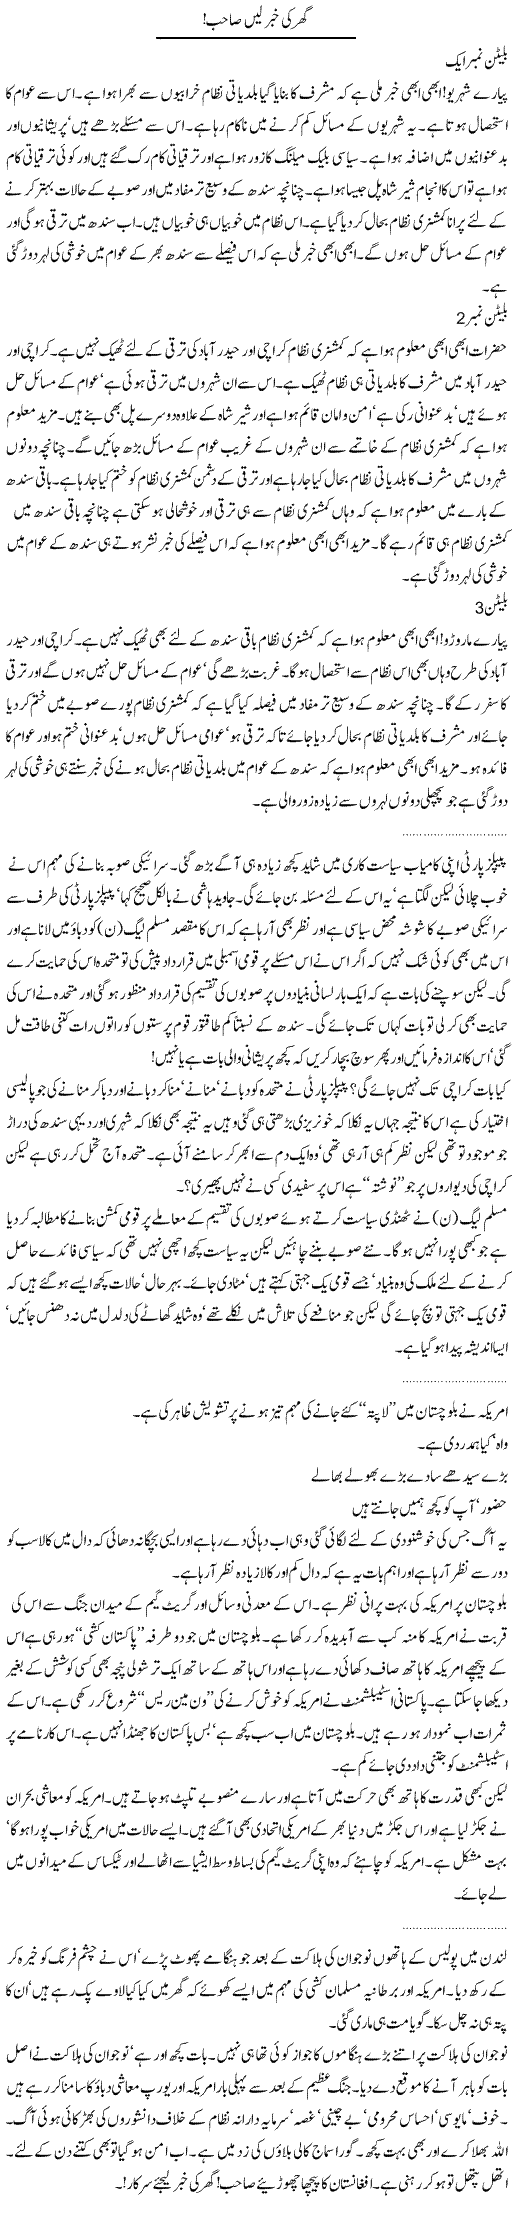 America in Balochistan Express Column Abdullah Tariq 10 August 2011